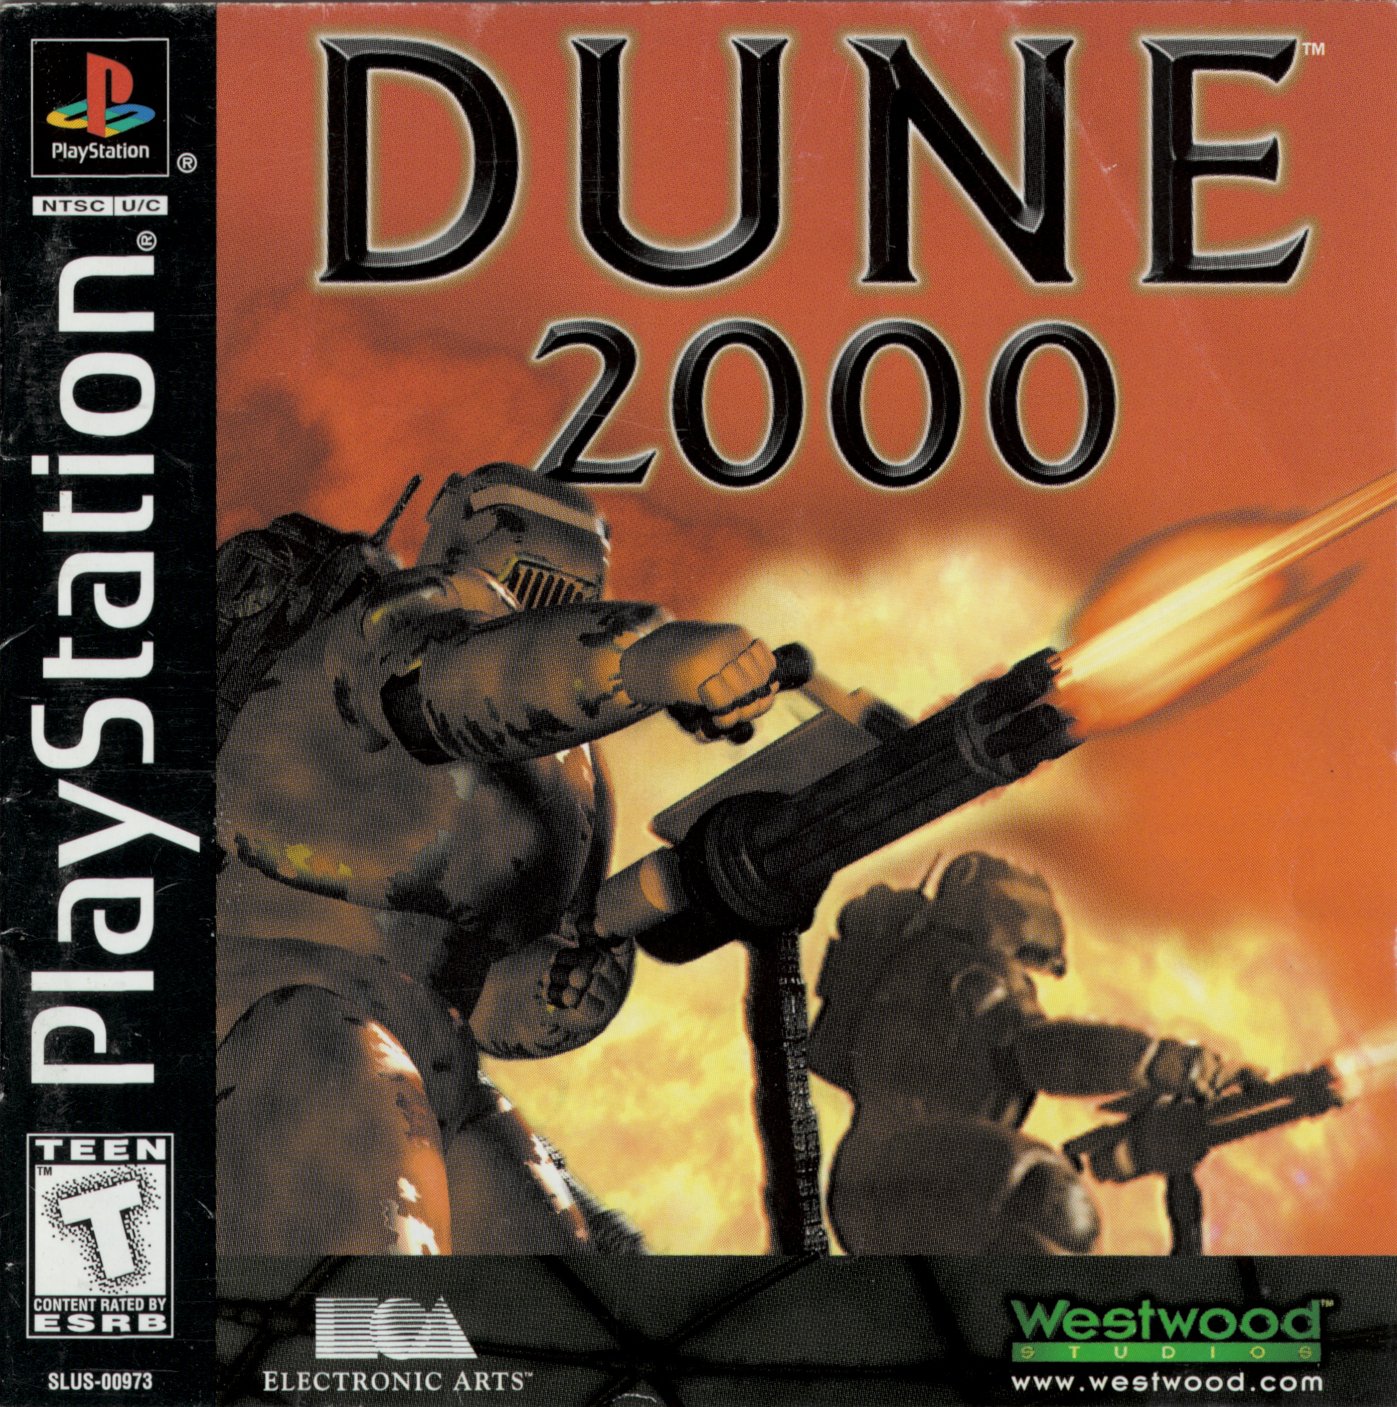 Duna 1. Dune 2000 ps1. Dune 2000 ps1 Cover. Dune 2000 (USA) ps1. Dune 2000 PLAYSTATION 1.